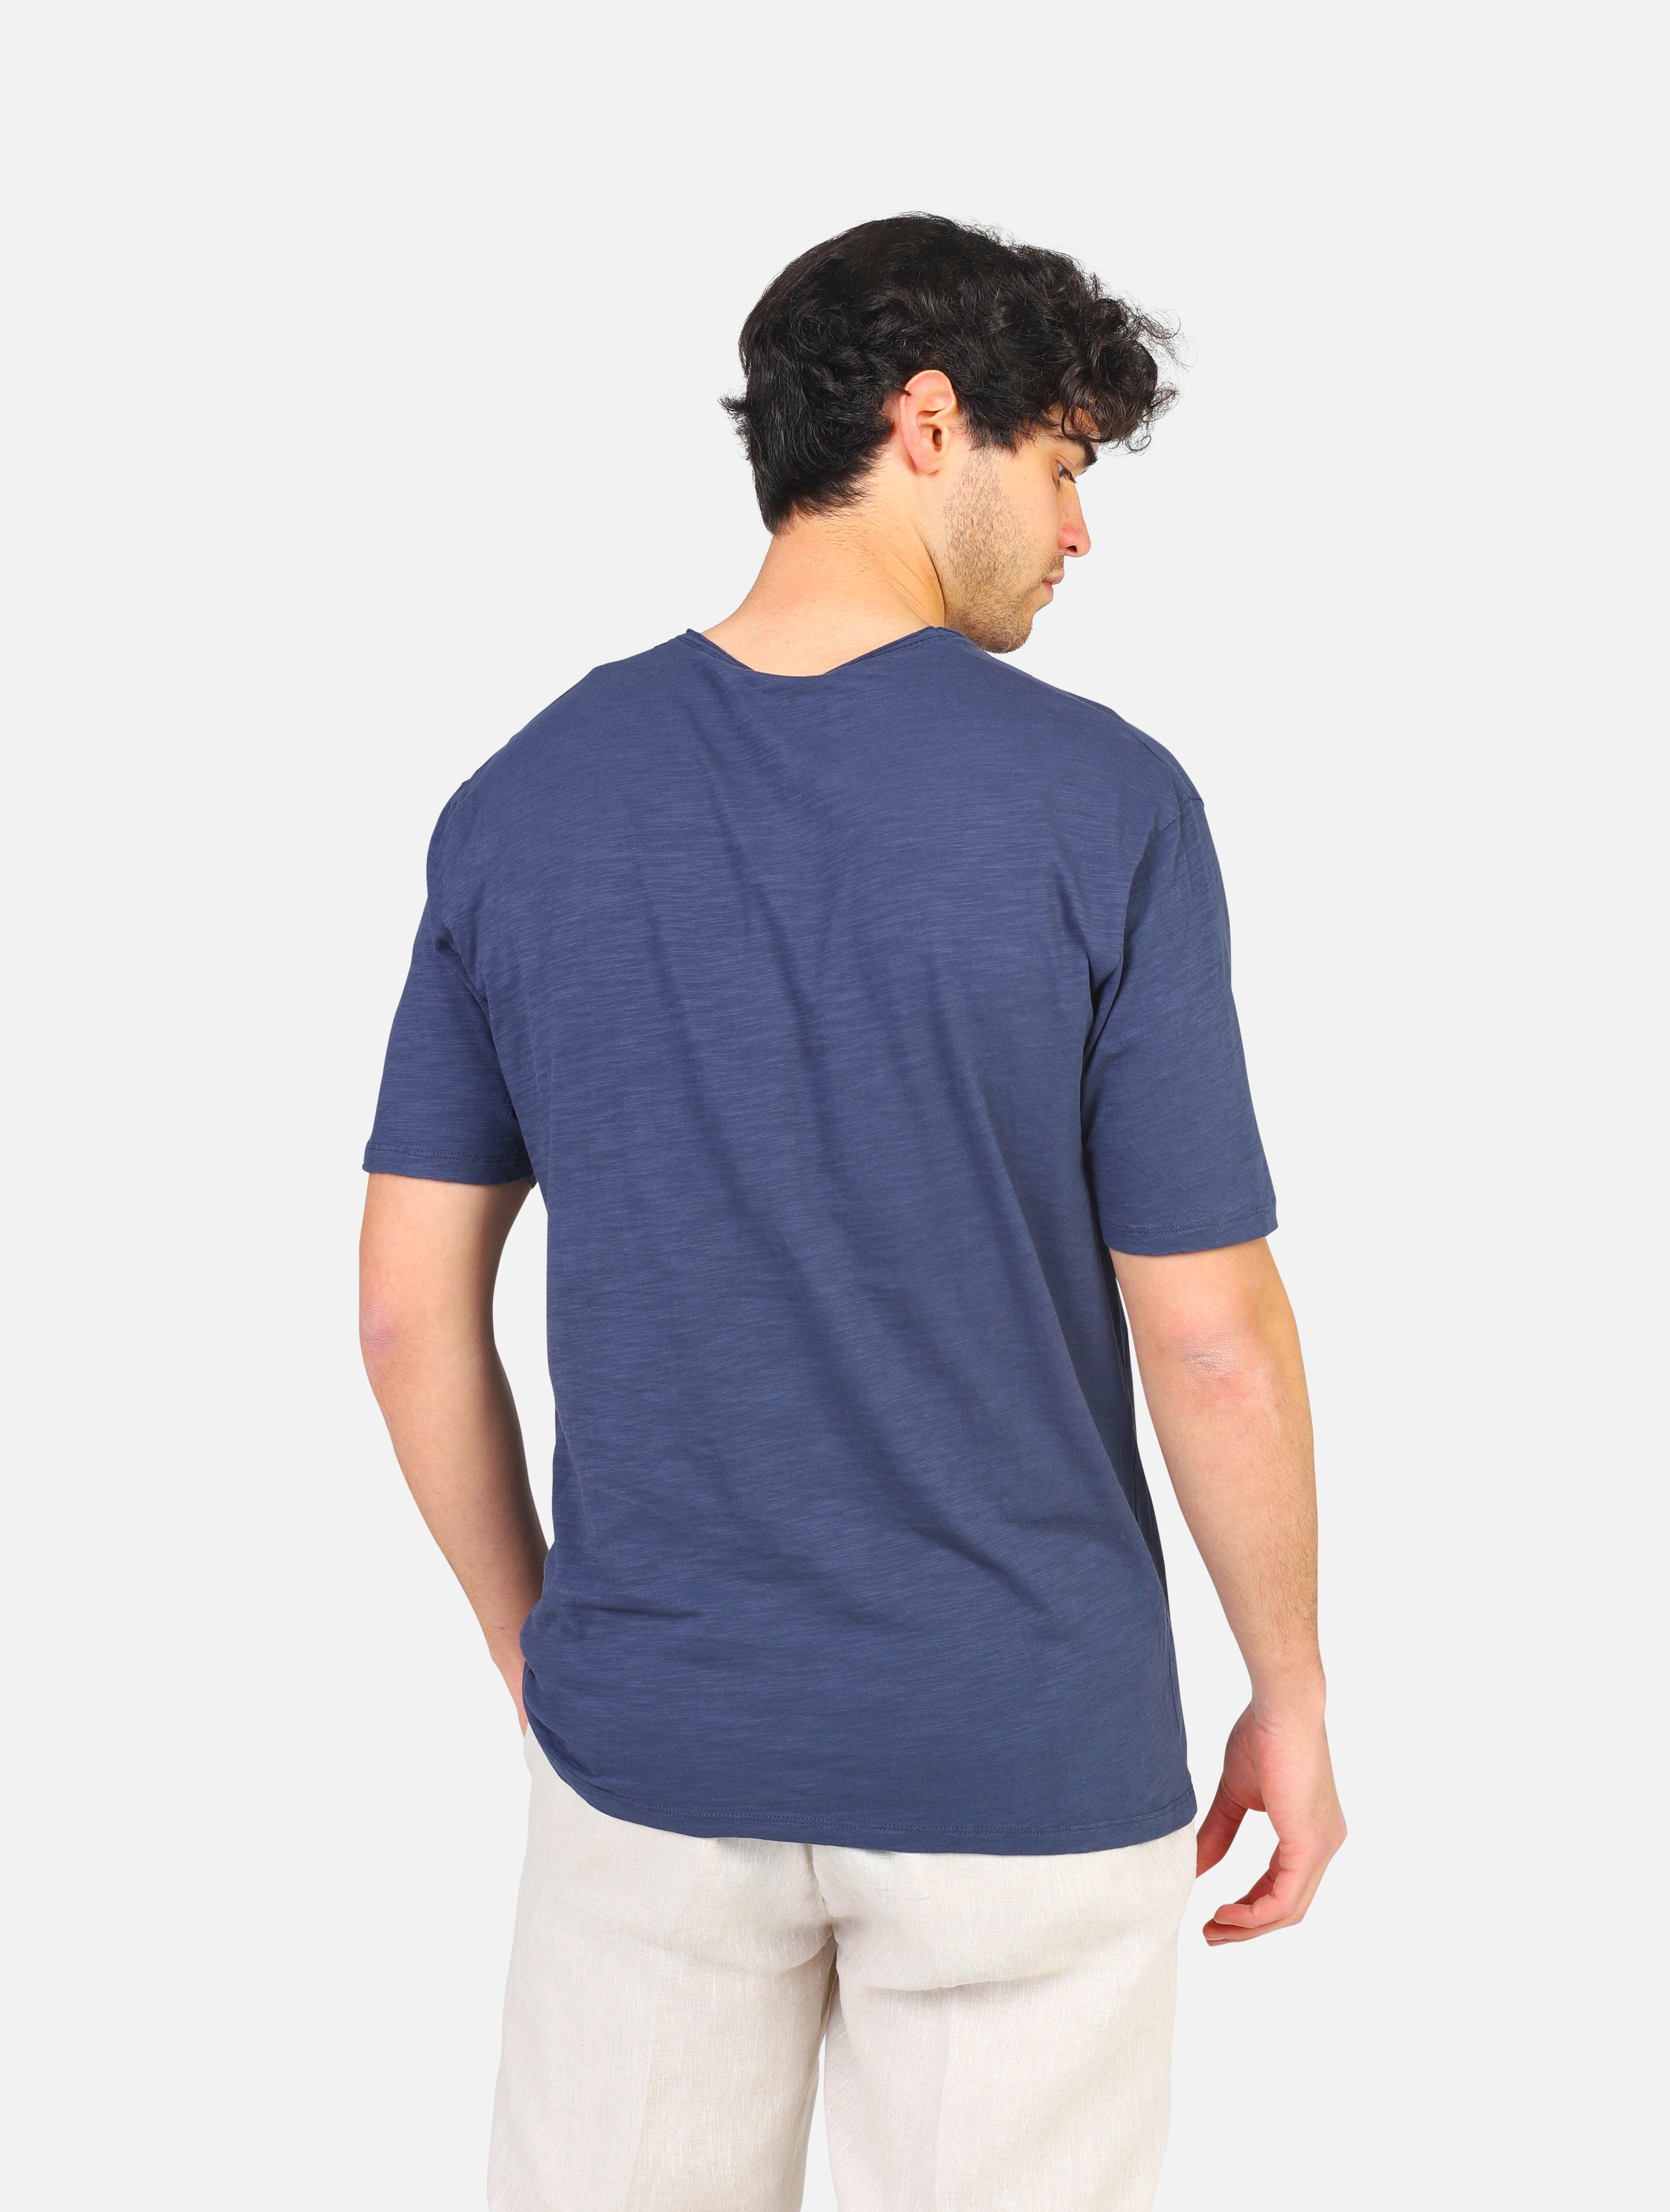 T-shirt gianni lupo -  blu uomo  - 3